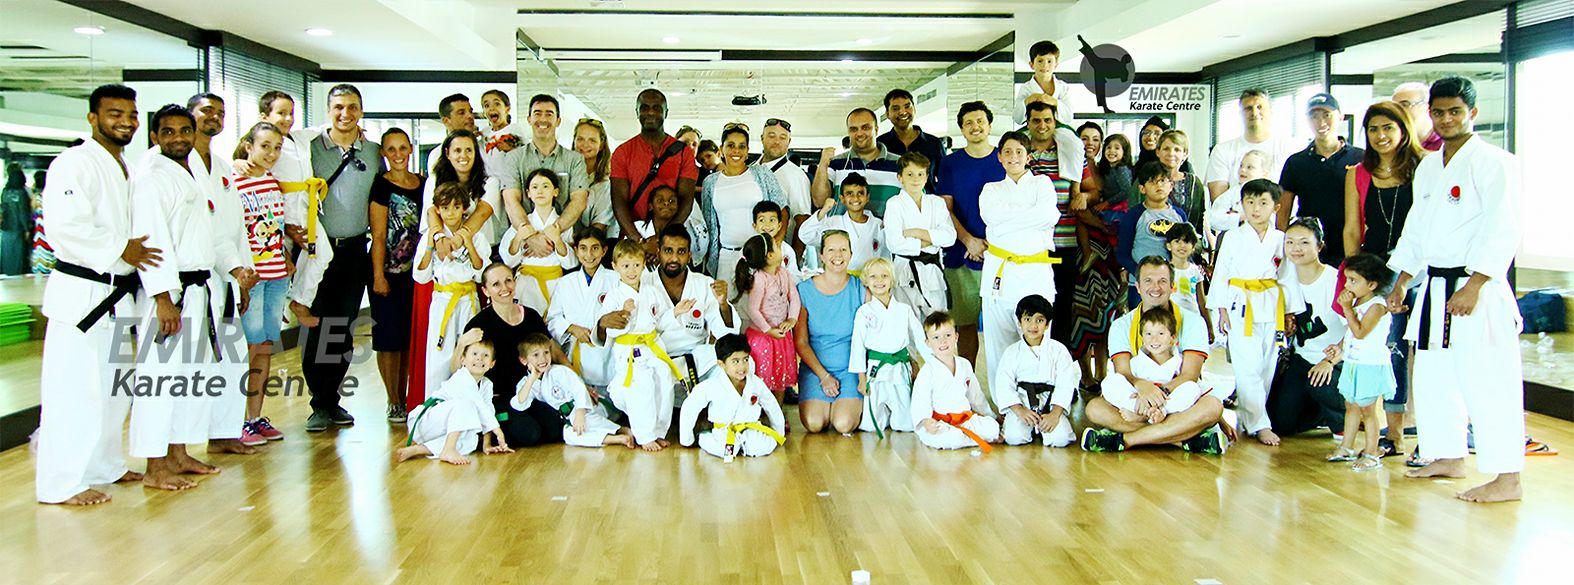 Emirates Karate Yoga and Tai chi Center United Arab Emirates